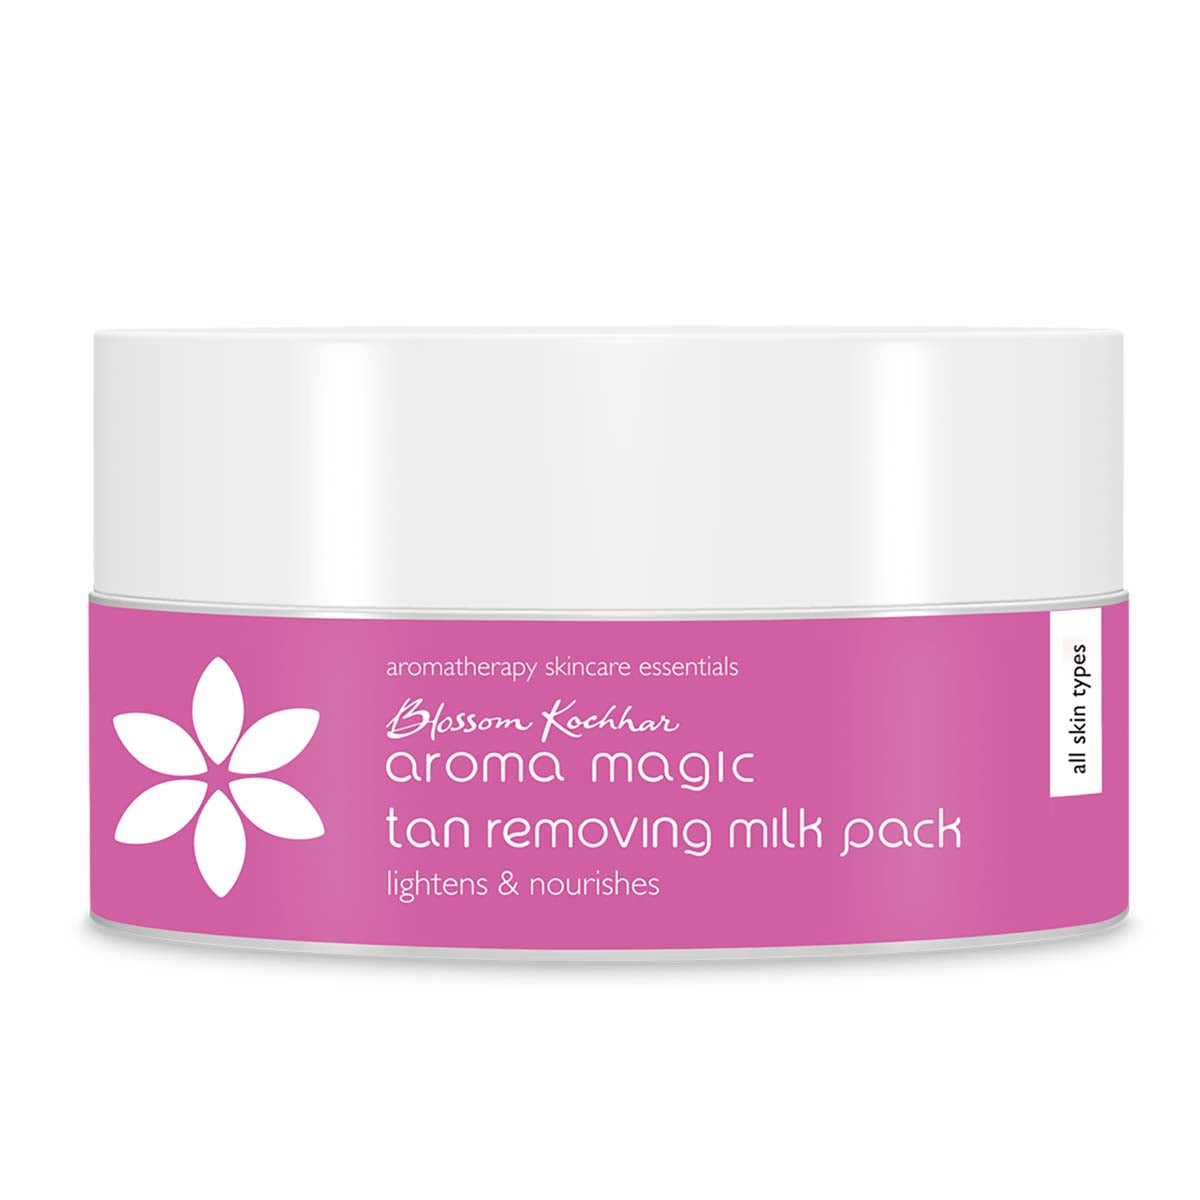 Aroma Magic Tan Removing Milk Pack - Aroma Magic (1009464967211)